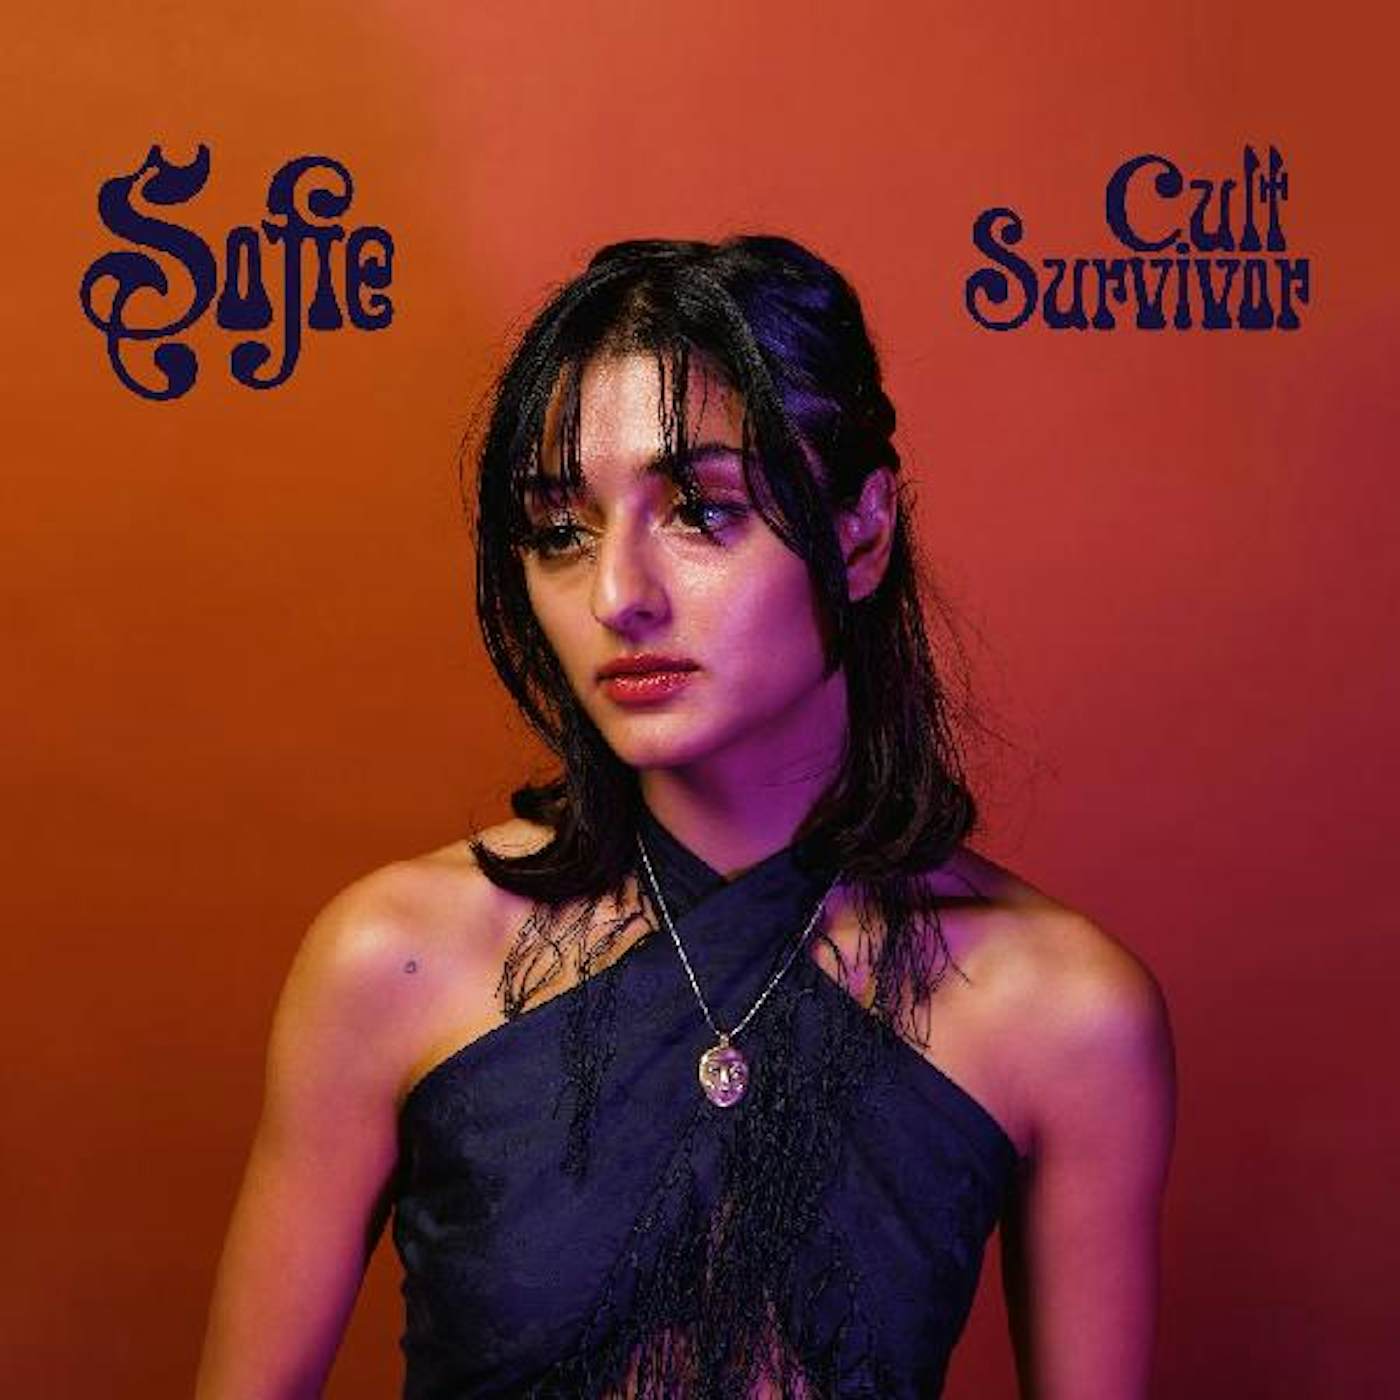 Sofie Cult Survivor Vinyl Record